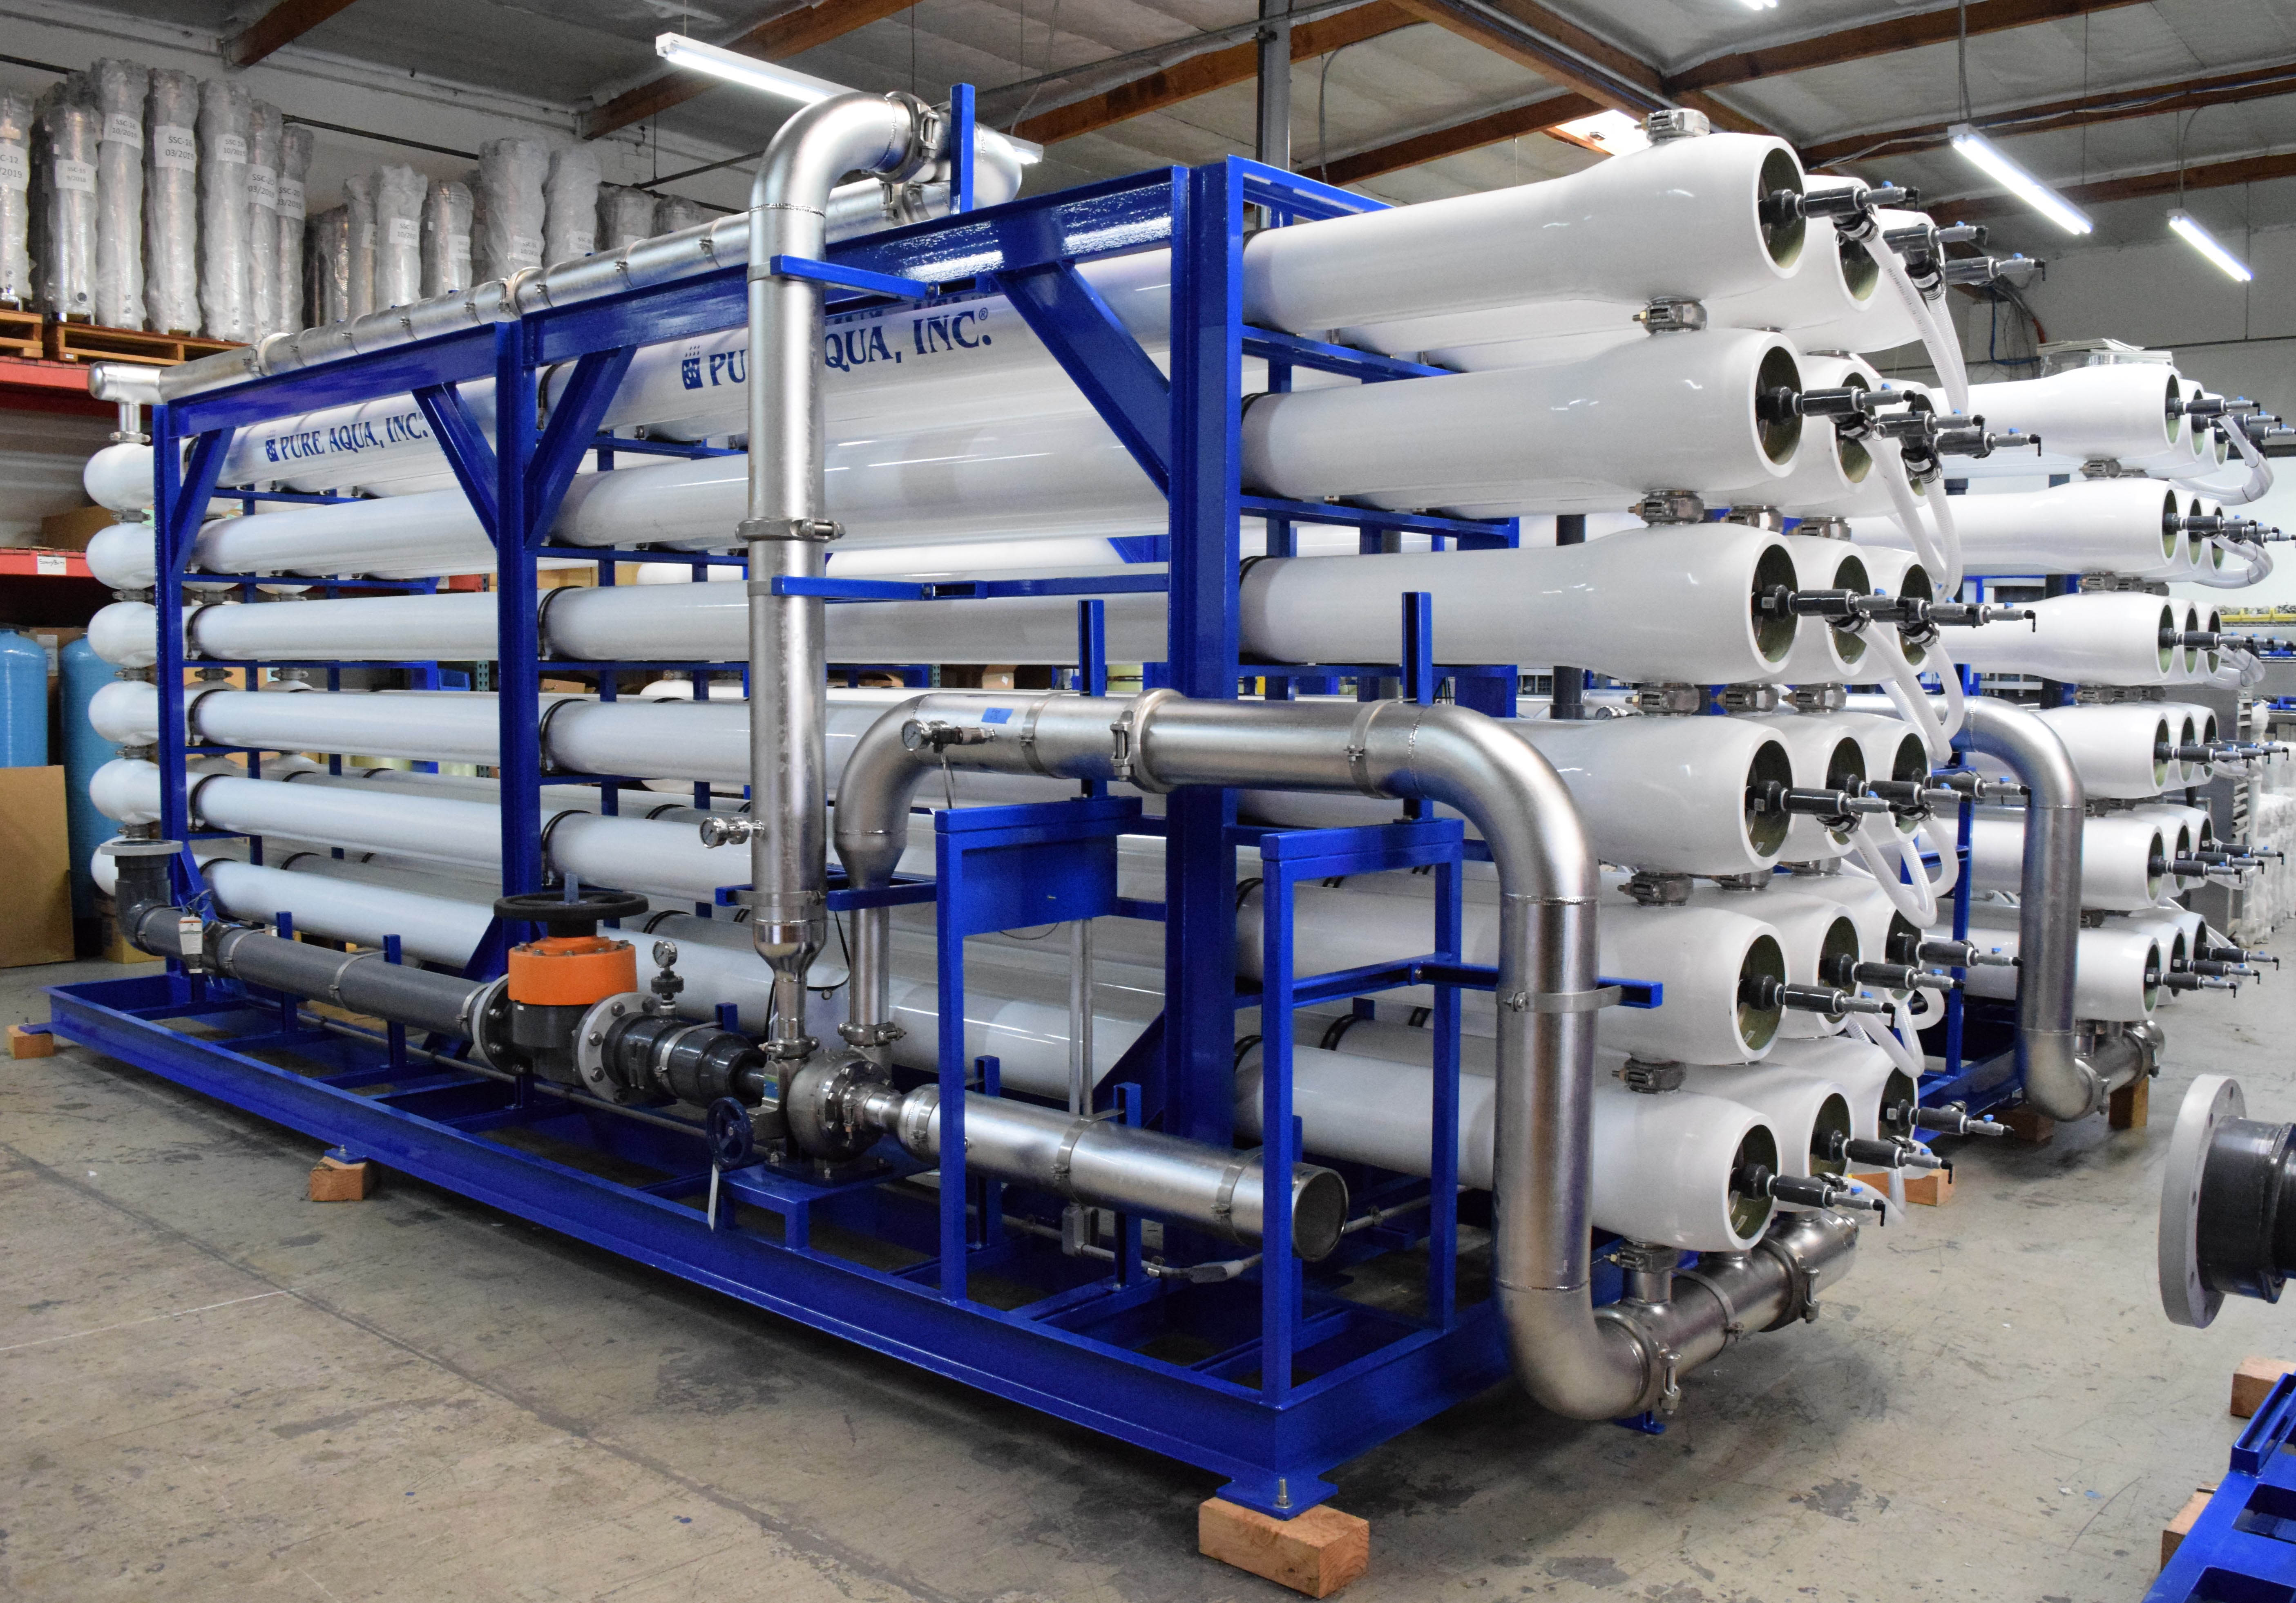 desalination plant